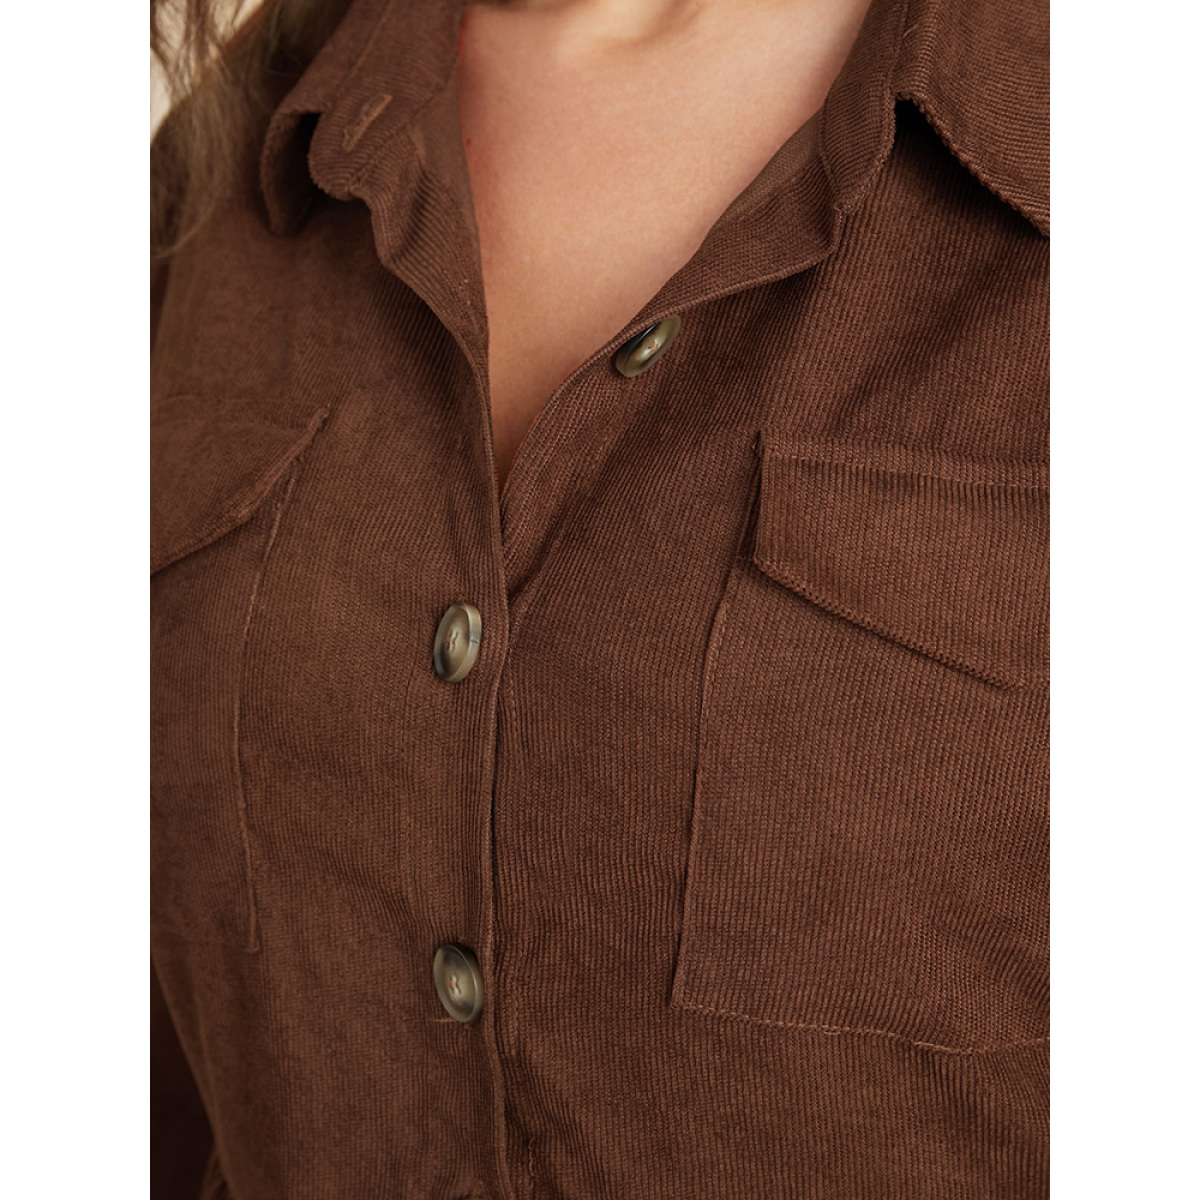 

Plus Size Solid Pocket Button Up Corduroy Shirt Collar Dress Without Belt DarkBrown Women Button Shirt collar Long Sleeve Curvy Midi Dress BloomChic